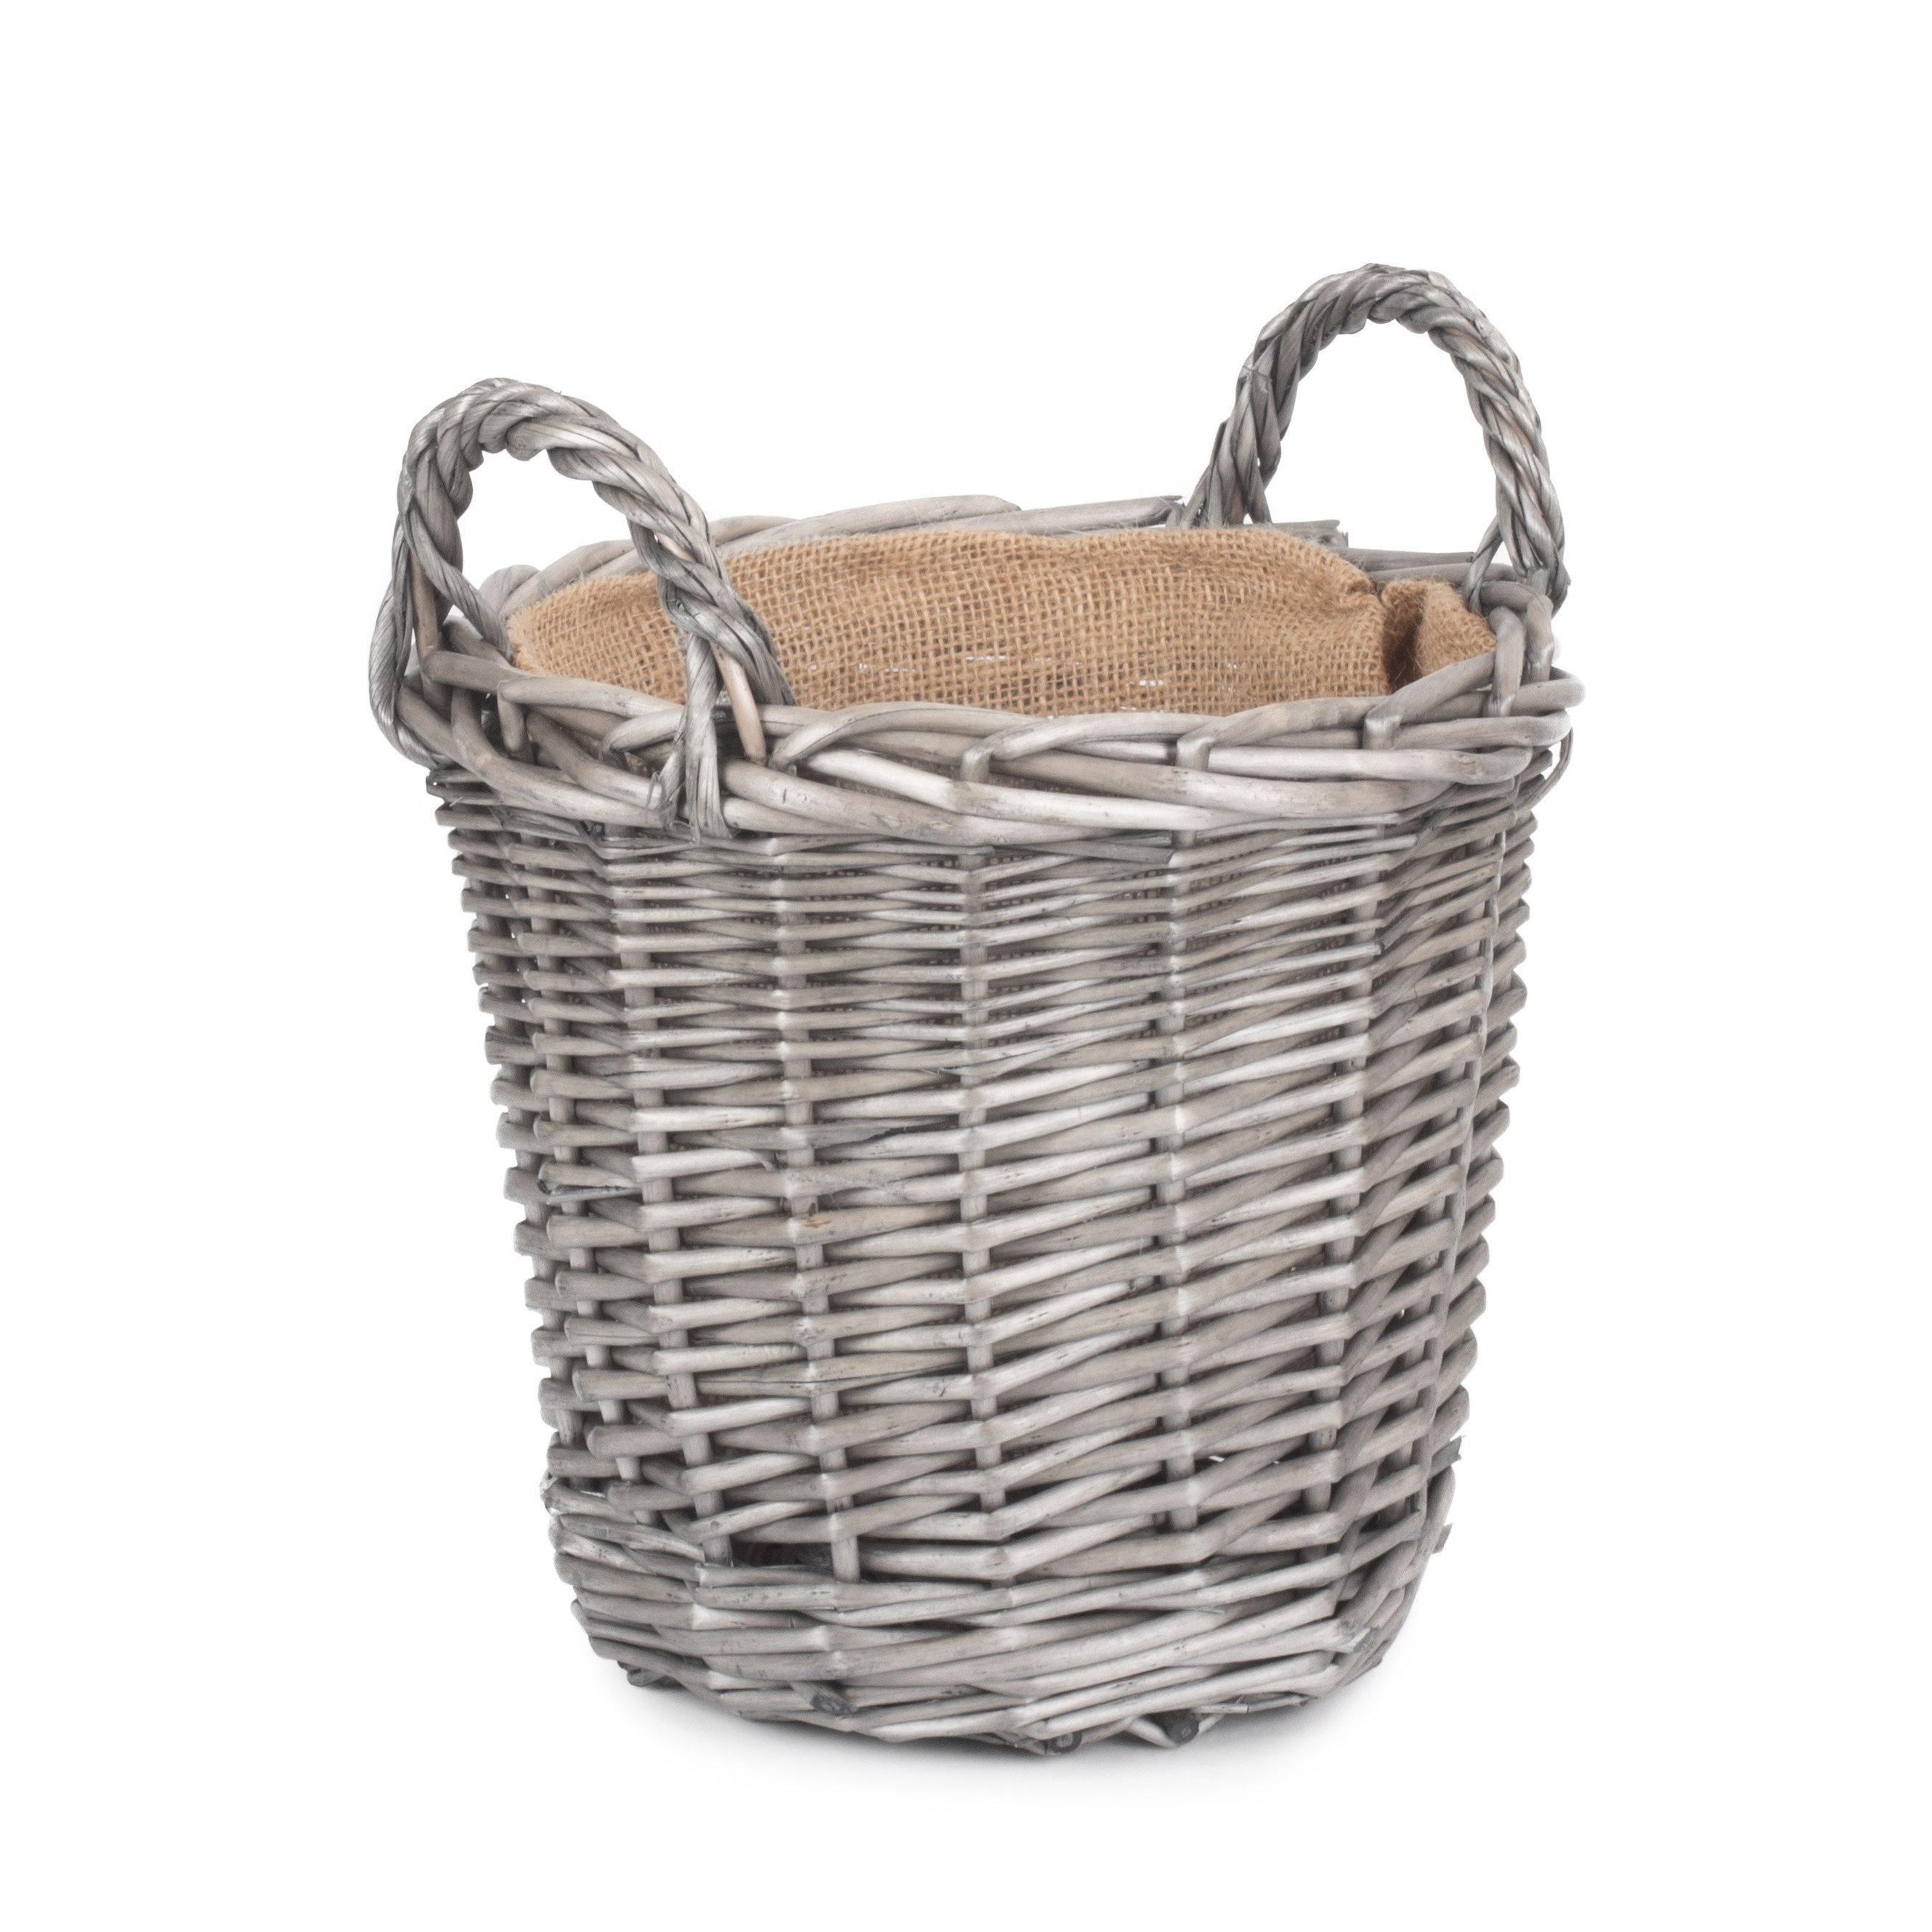 Wicker Antique Wash Finish Lined Log Baskets - image 1